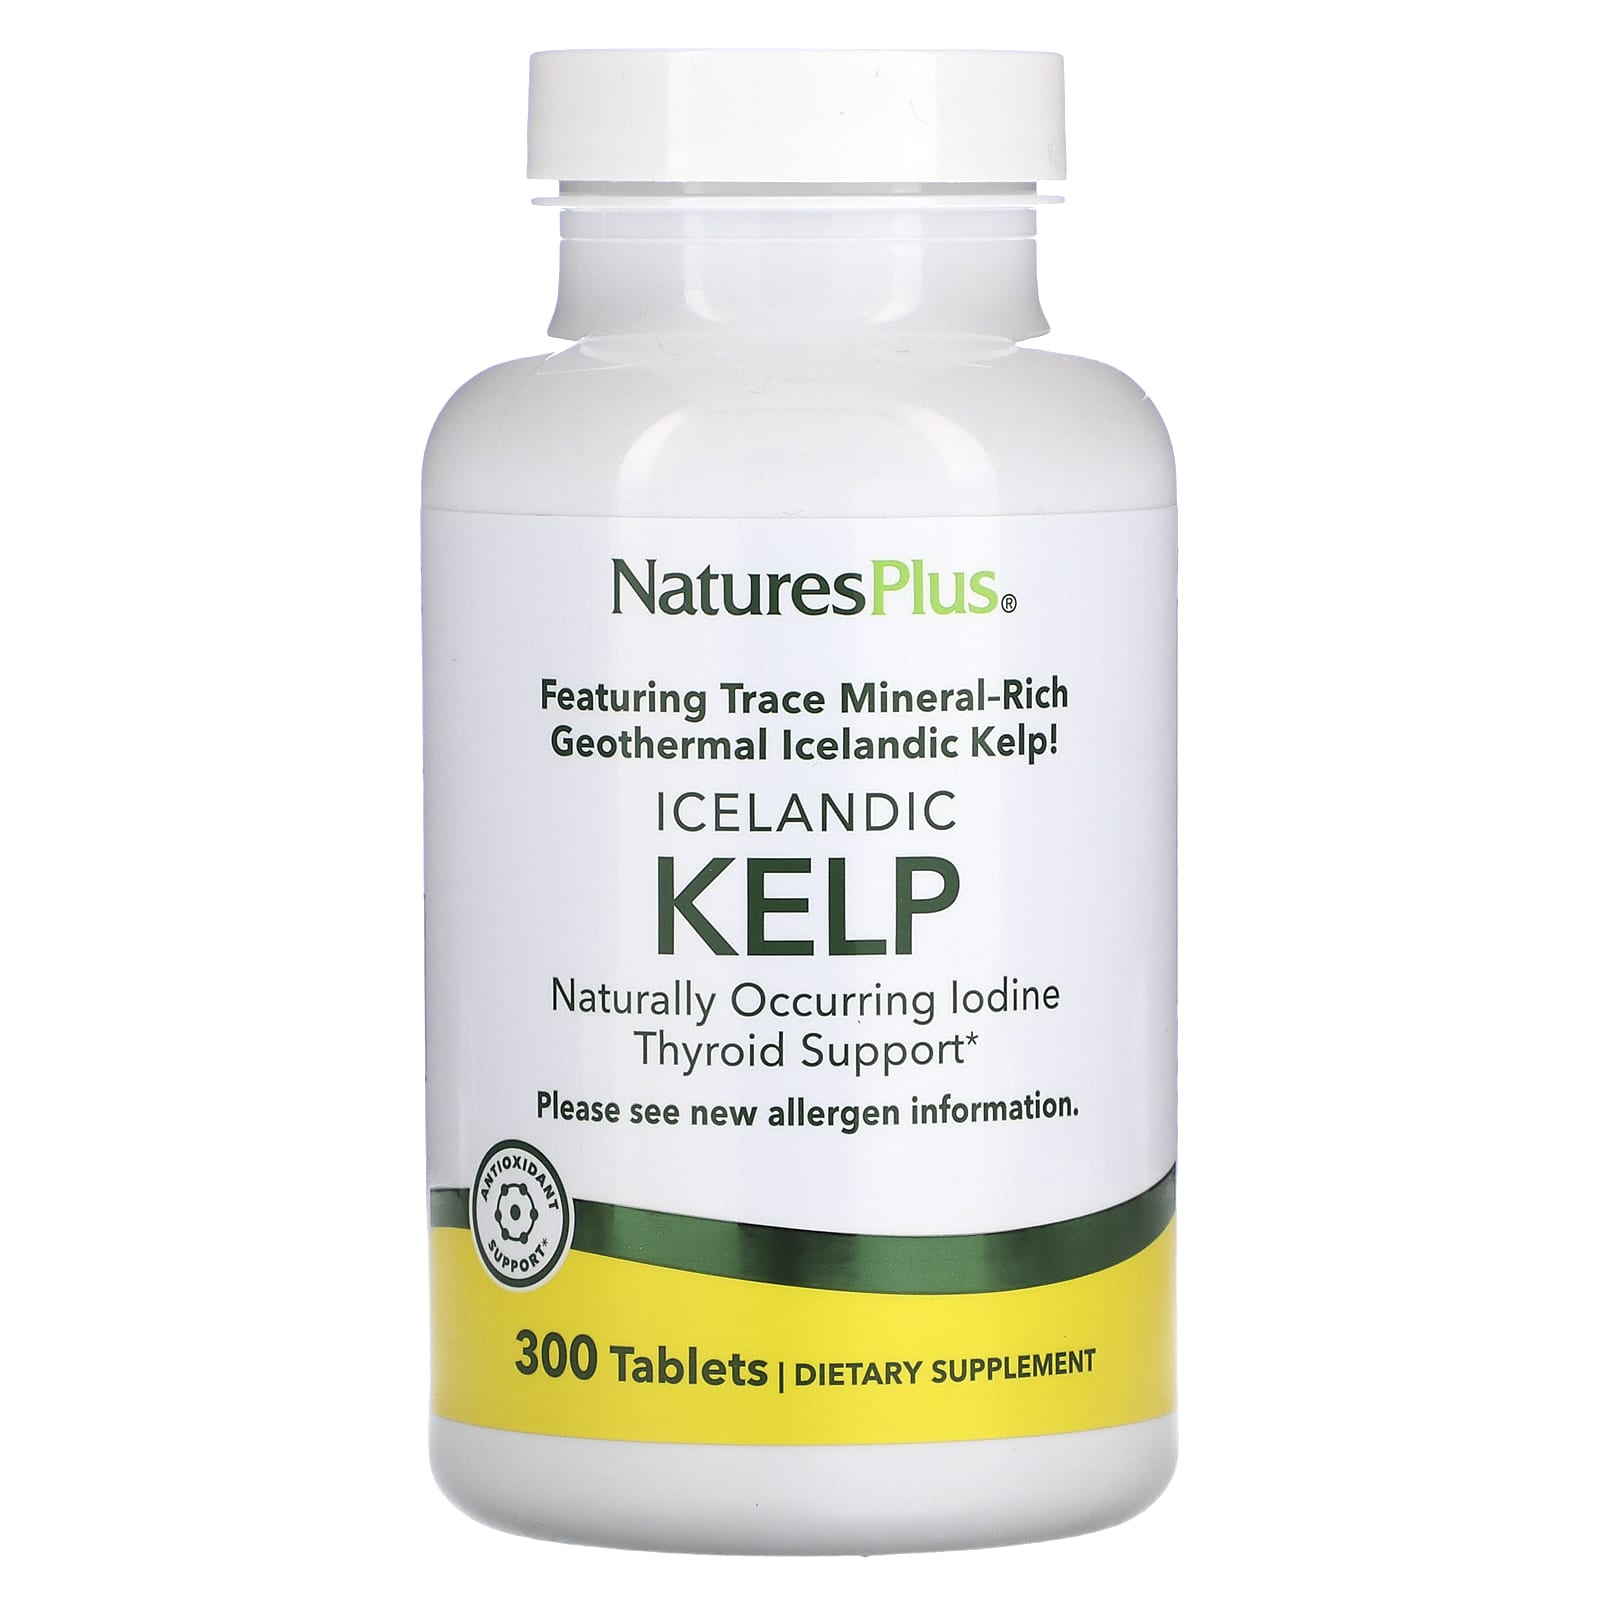 NaturesPlus-Icelandic Kelp-300 Tablets